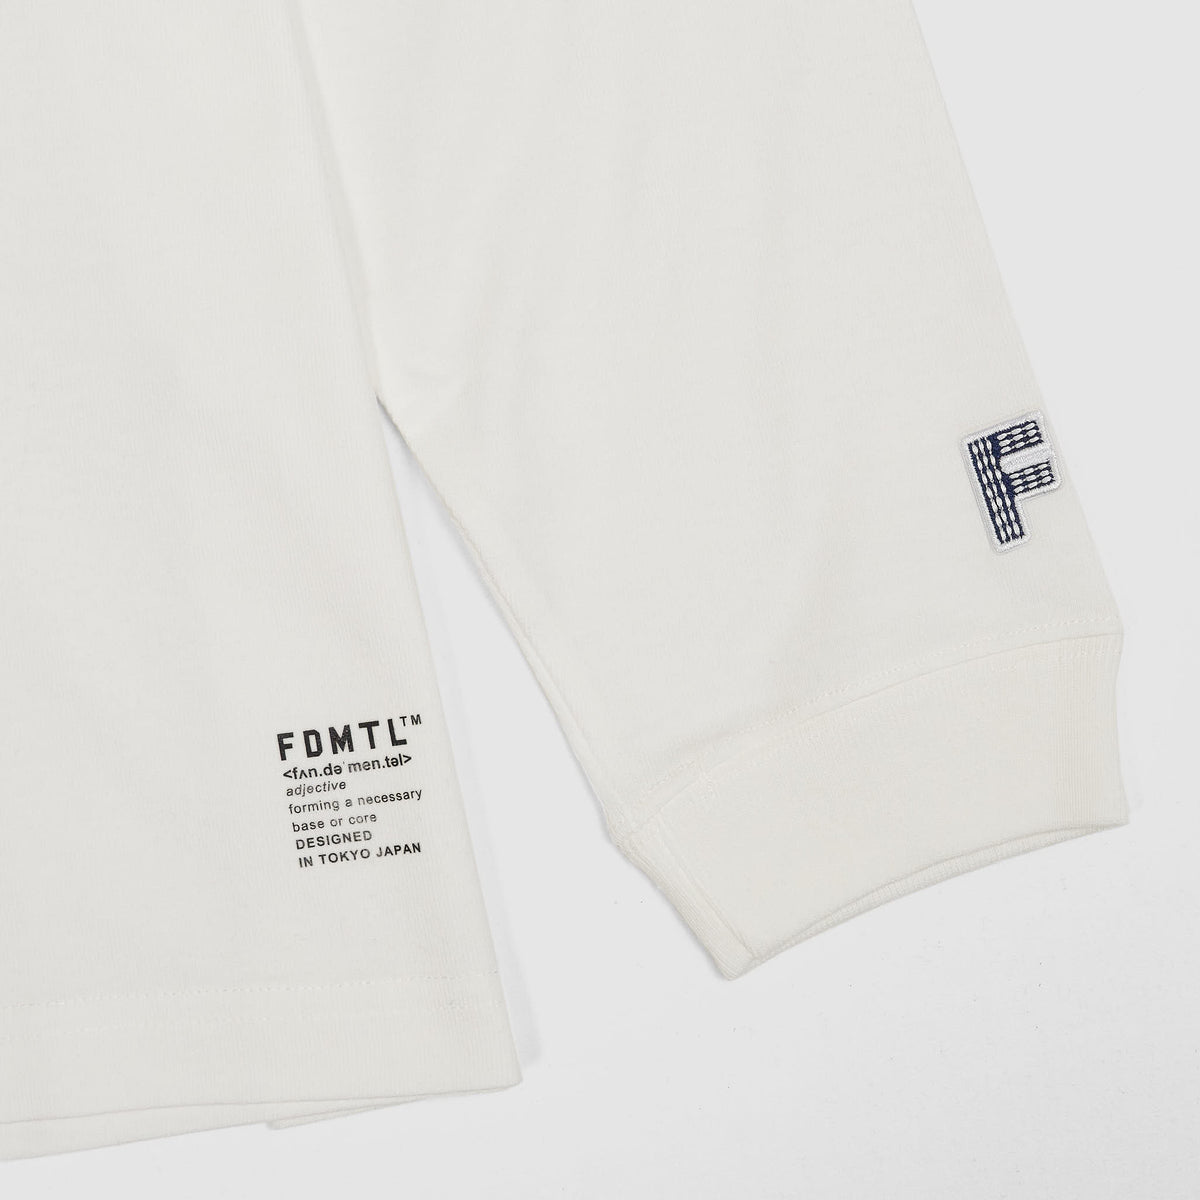 FDMTL Long Sleeve Logo Letters T-Shirts